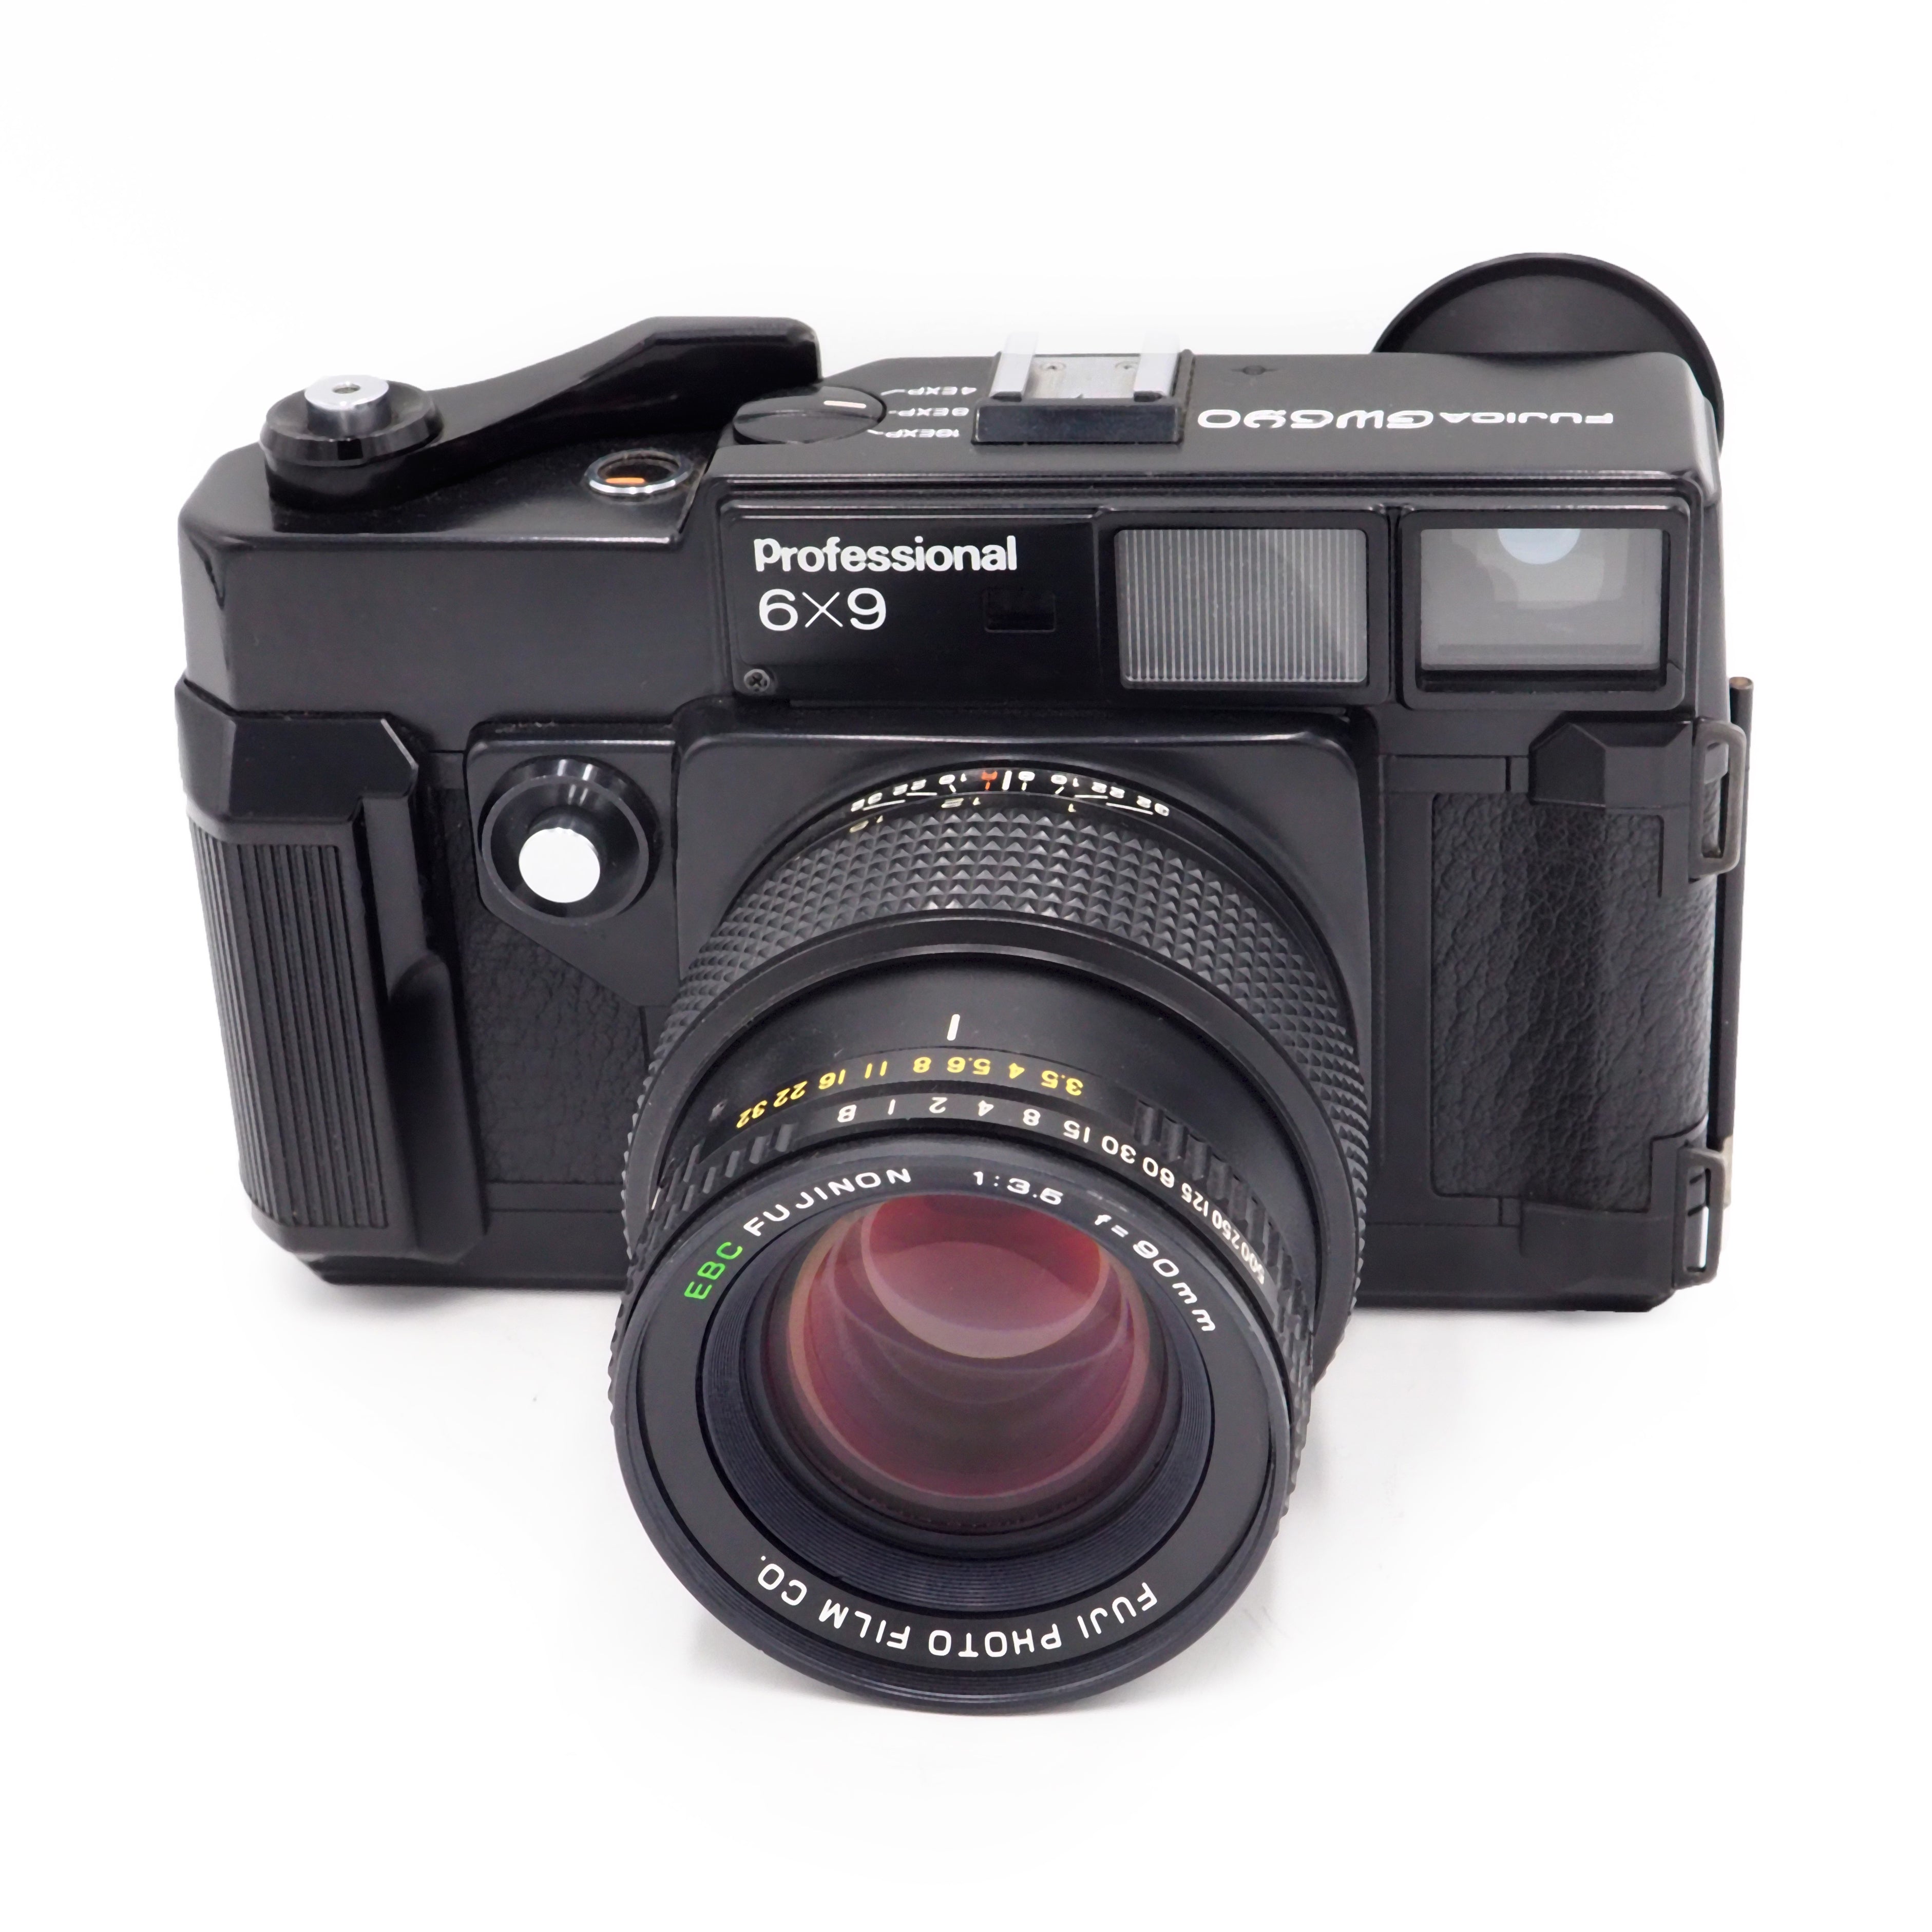 Fuji Fujica GW690 Professional with Fujinon 90mm F/3.5 Lens - USED